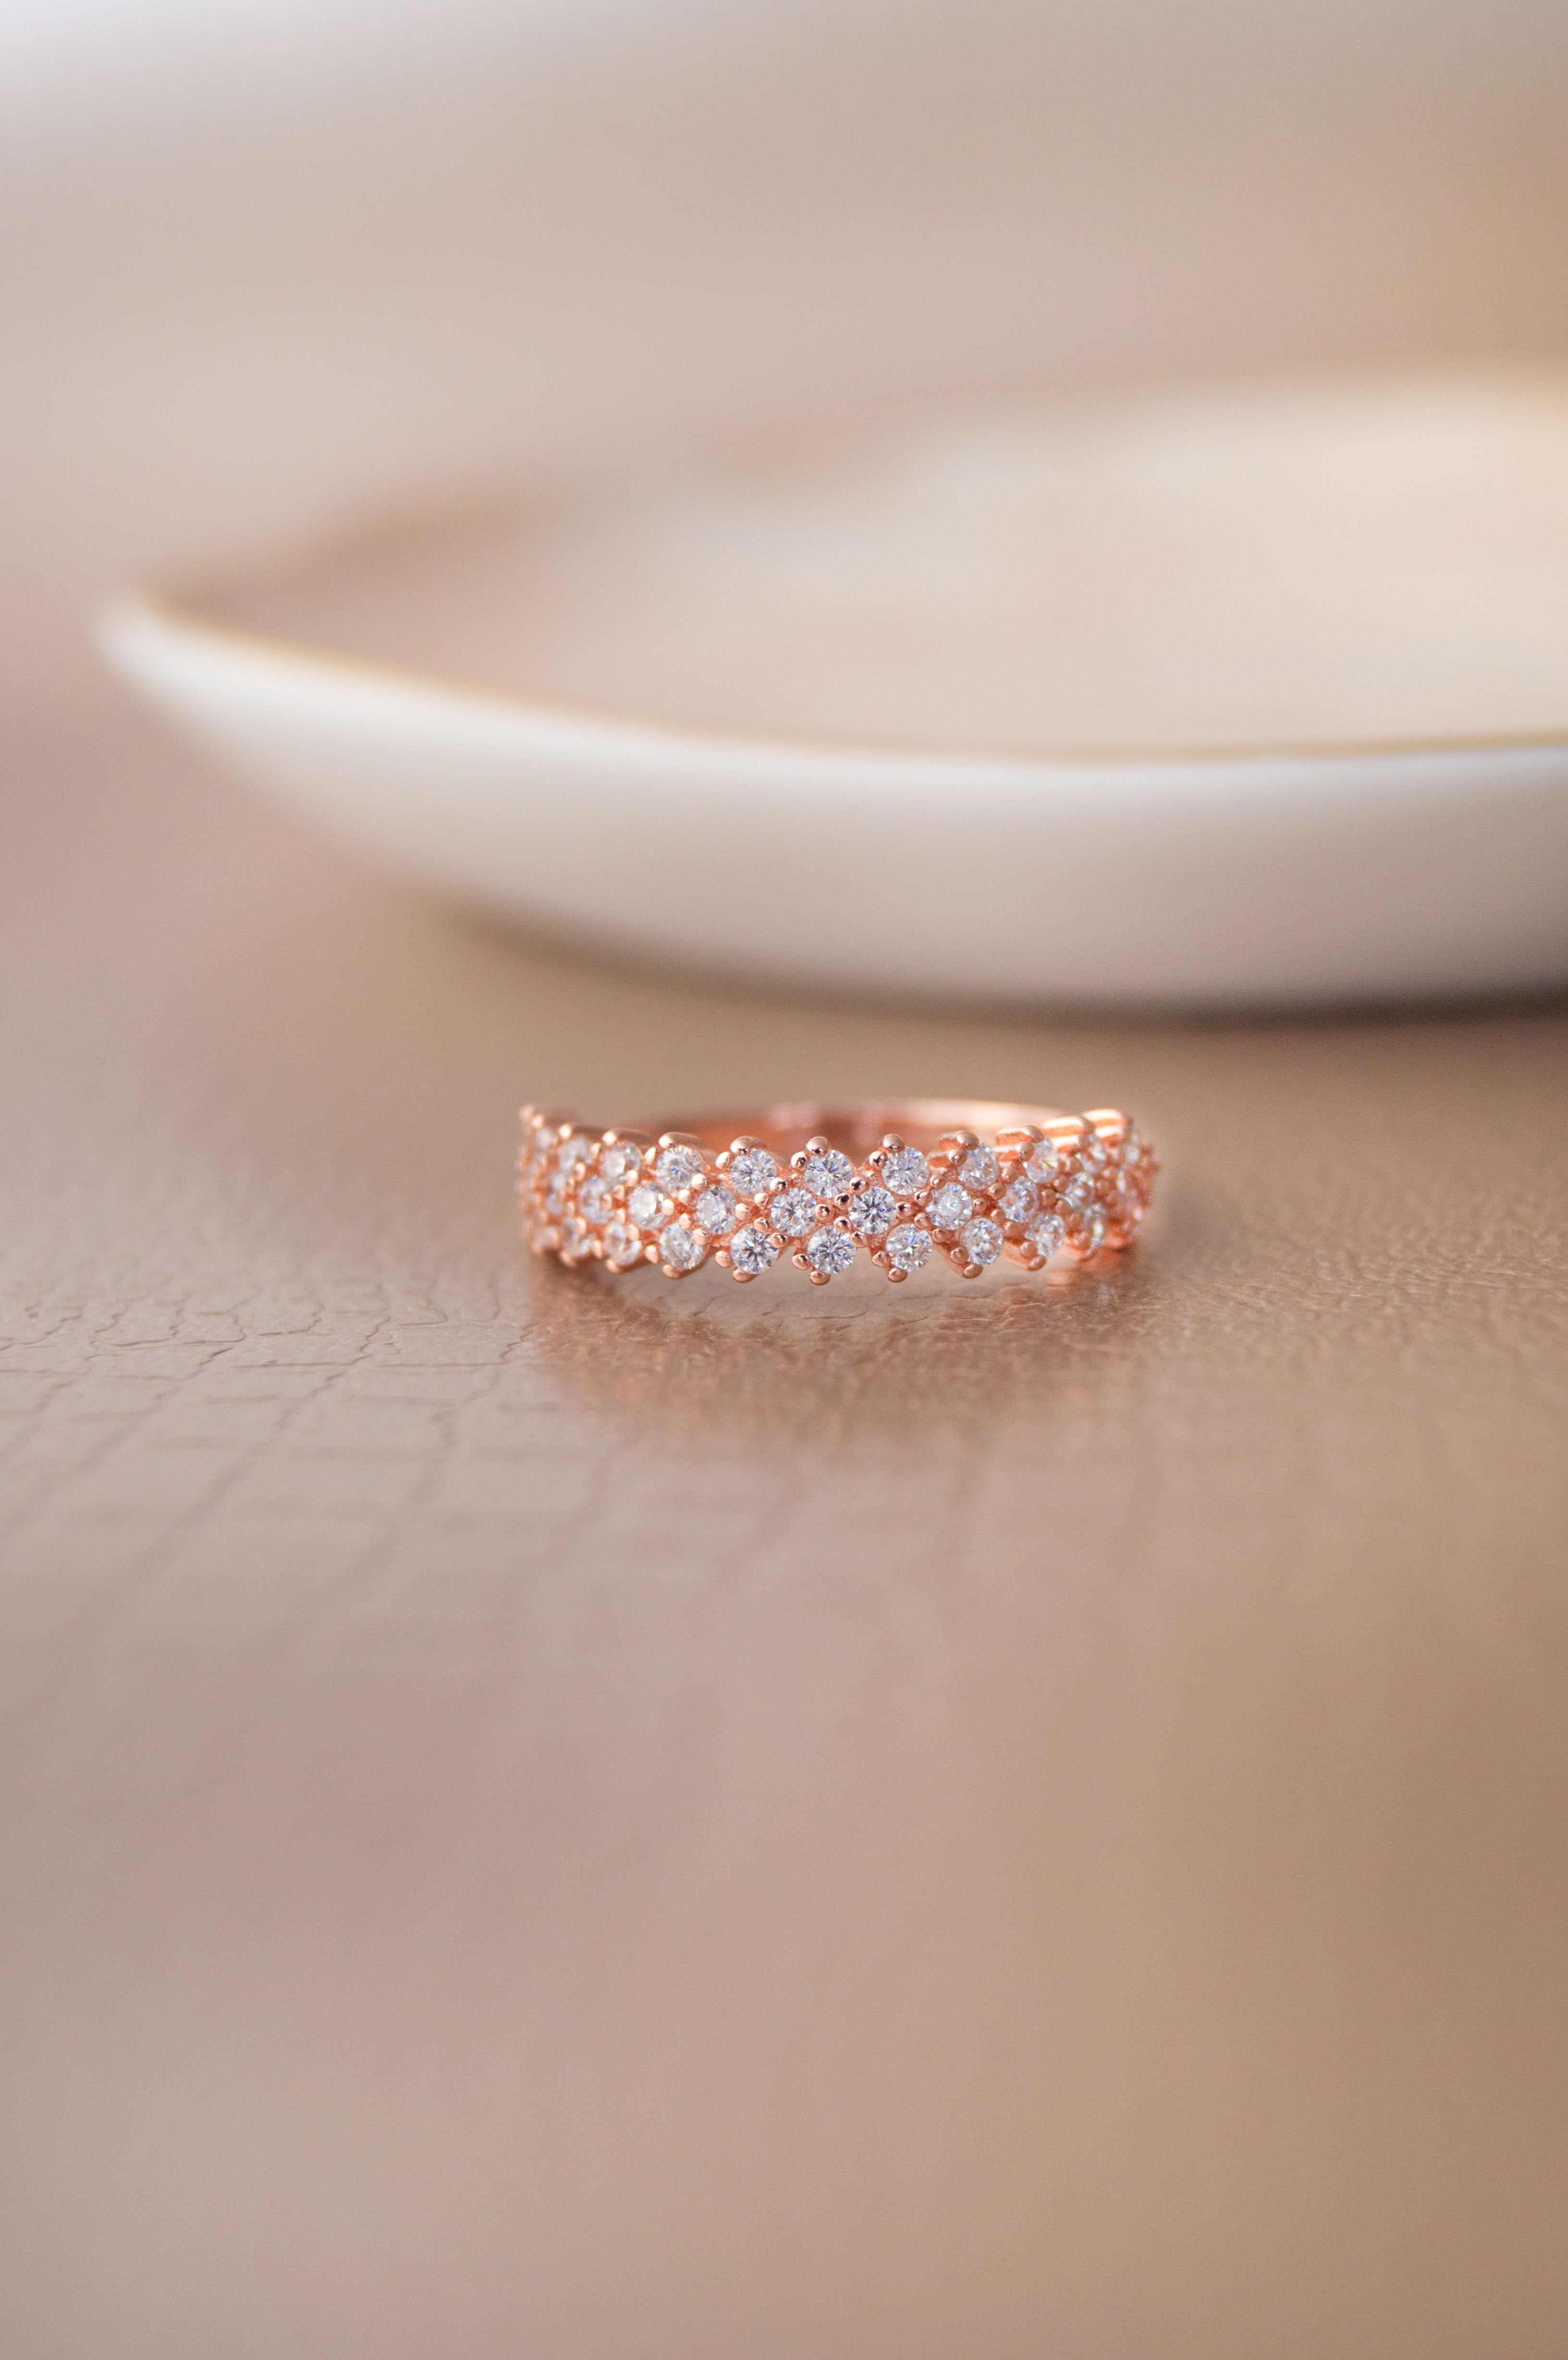 Minimalistic ring with diamond in Game of Thrones style | ateljedryewelery